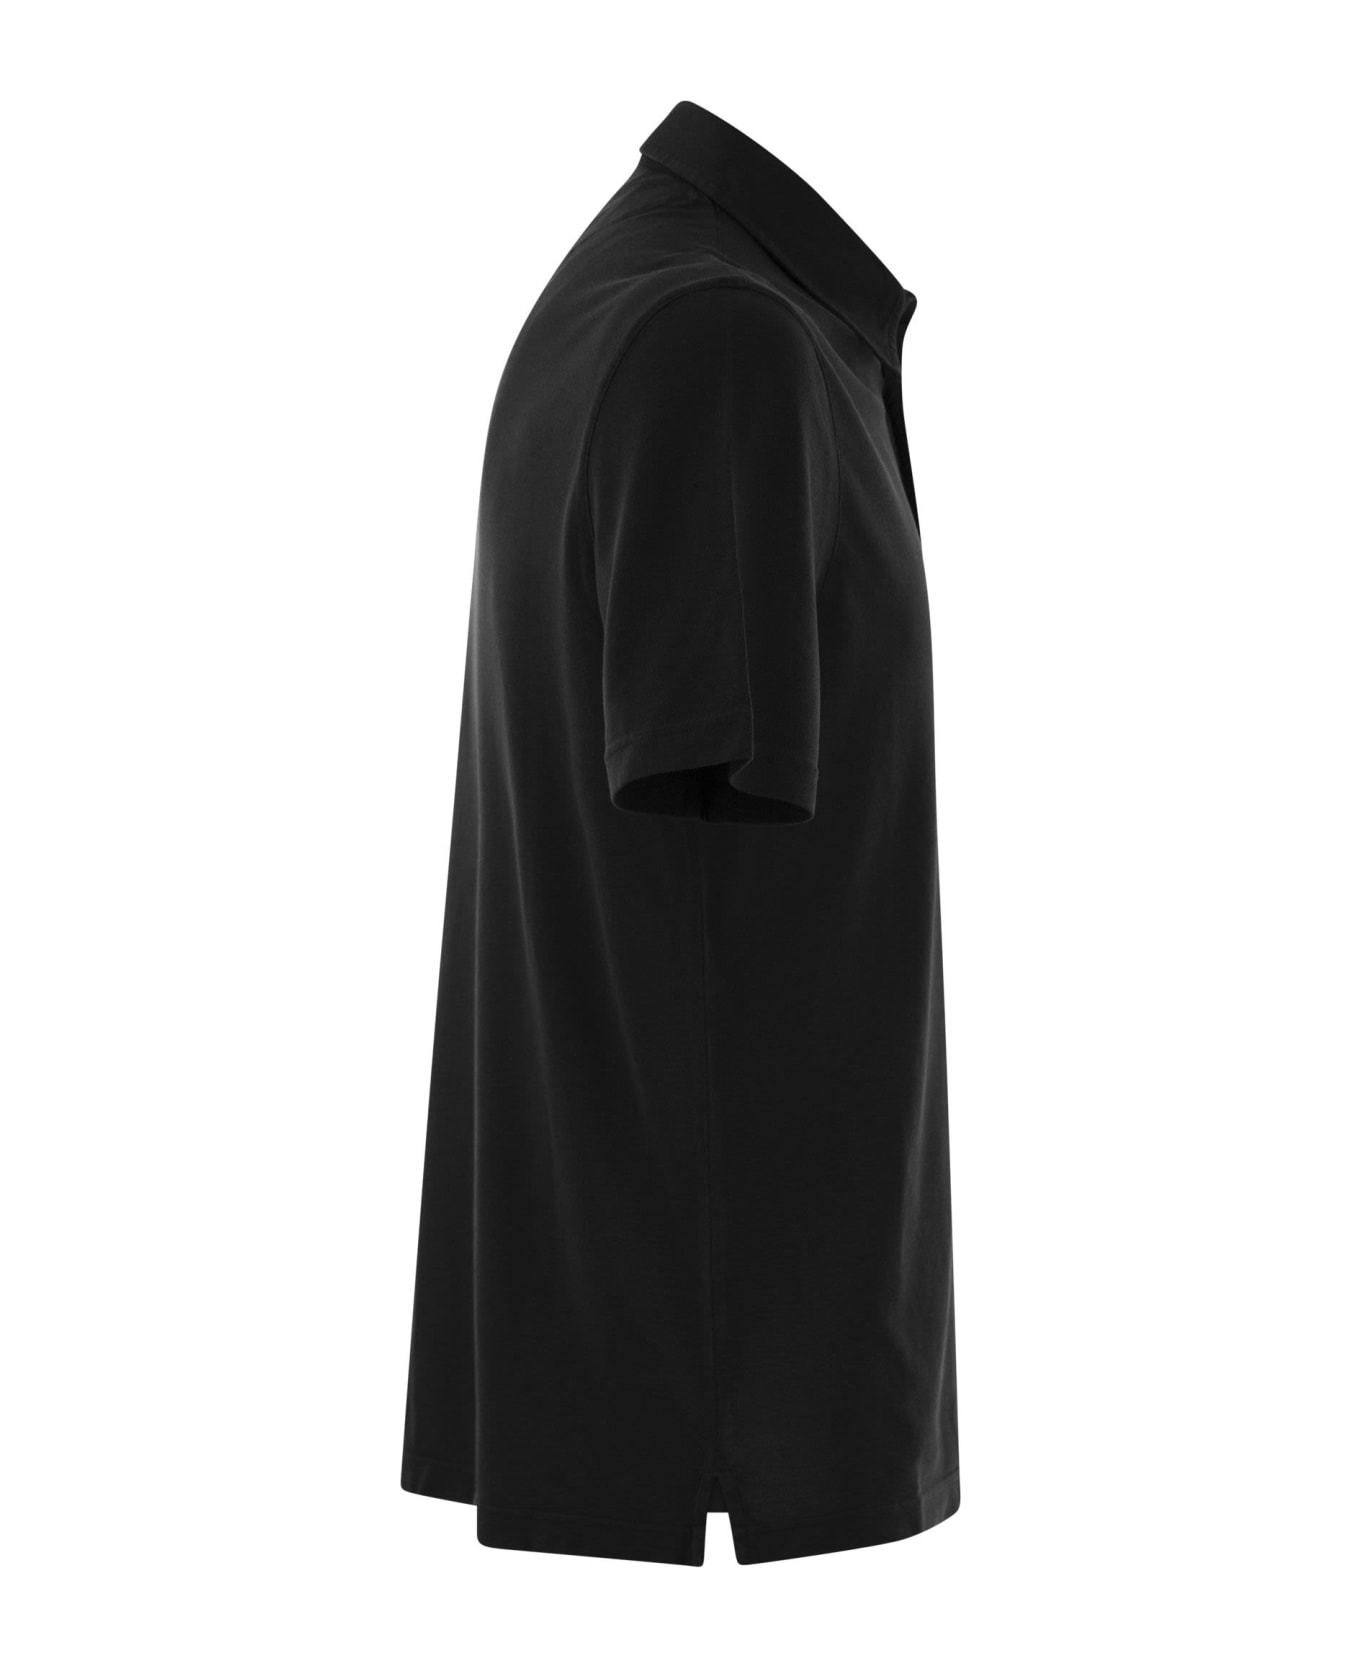 Fedeli Short-sleeved Cotton Polo Shirt - Black ポロシャツ